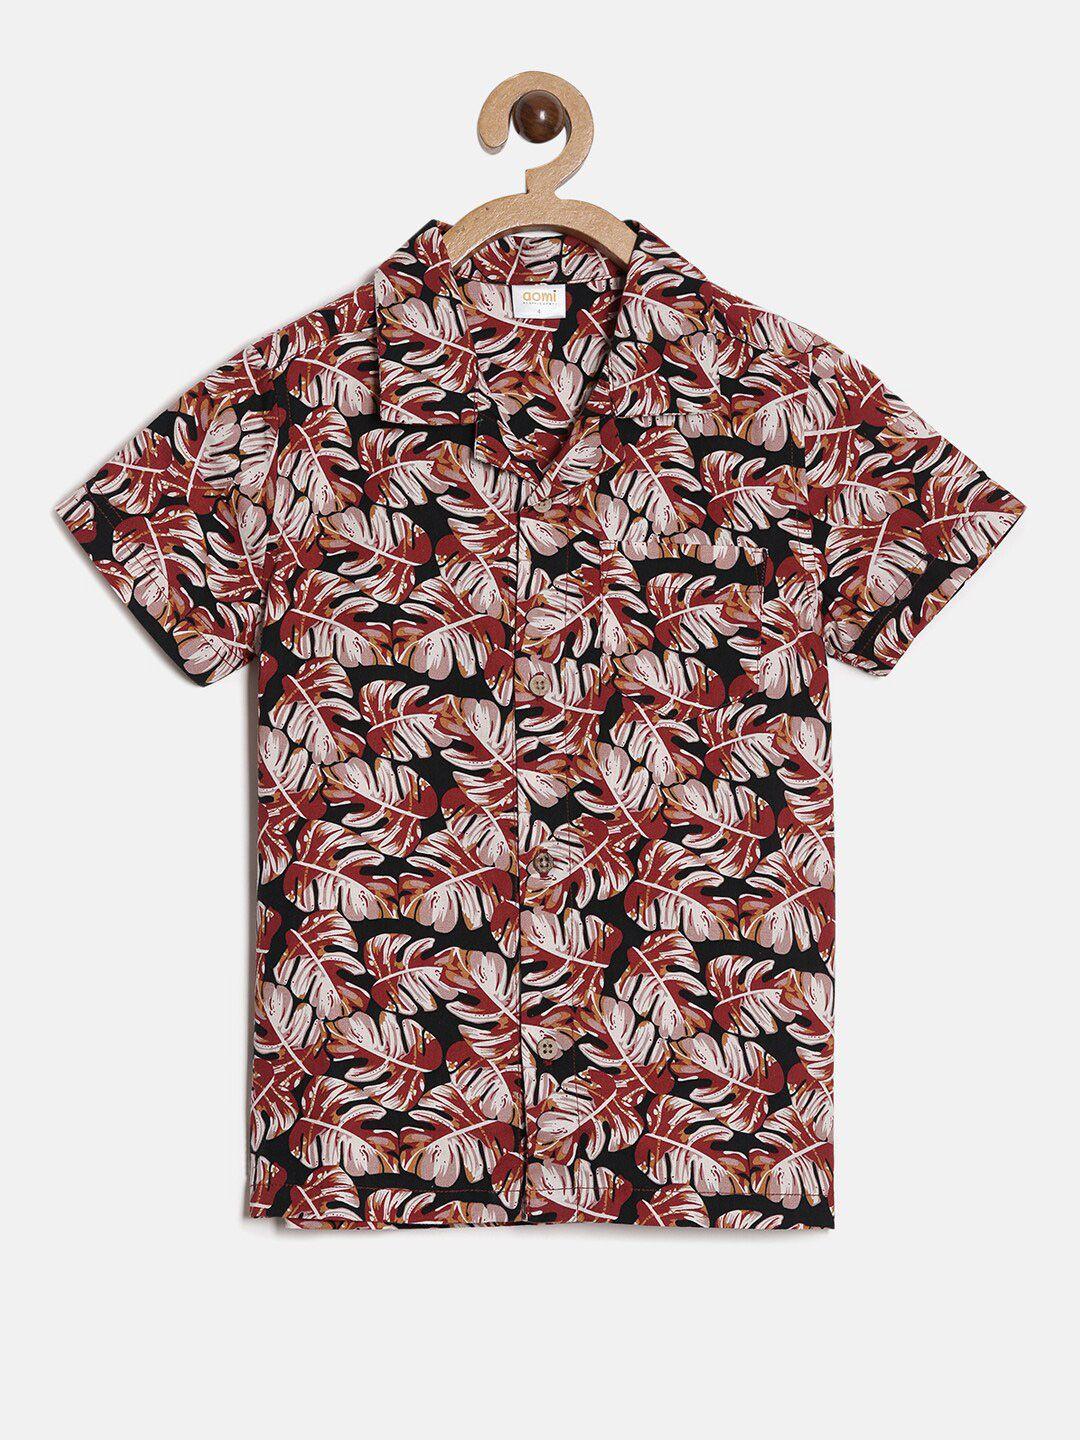 aomi boys rust floral sheer printed casual shirt